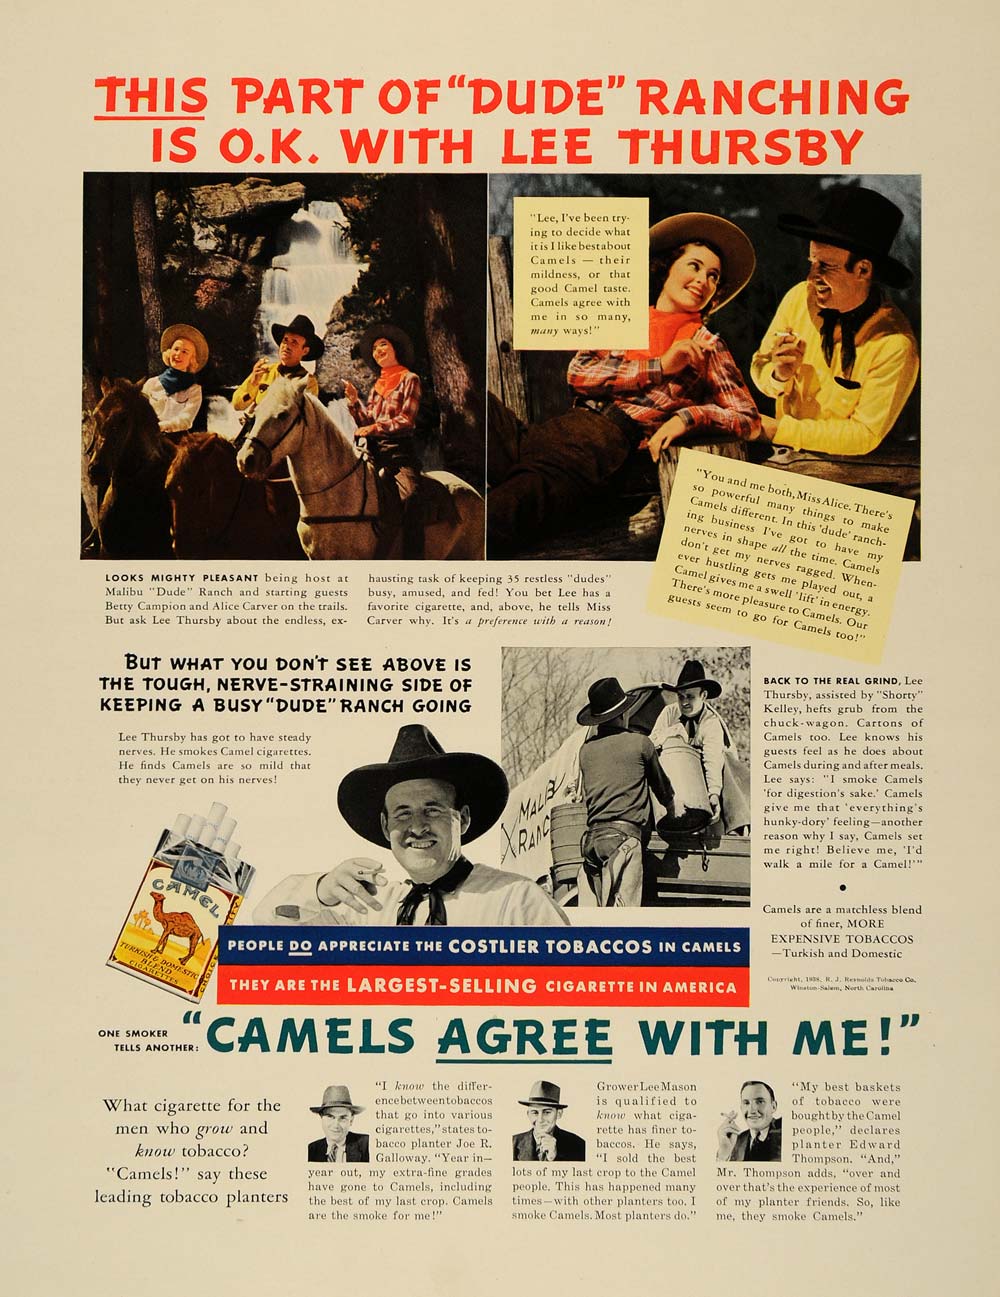 1938 Ad Camel Cigarettes Lee Thursby Alice Carver Smoke - ORIGINAL F2A